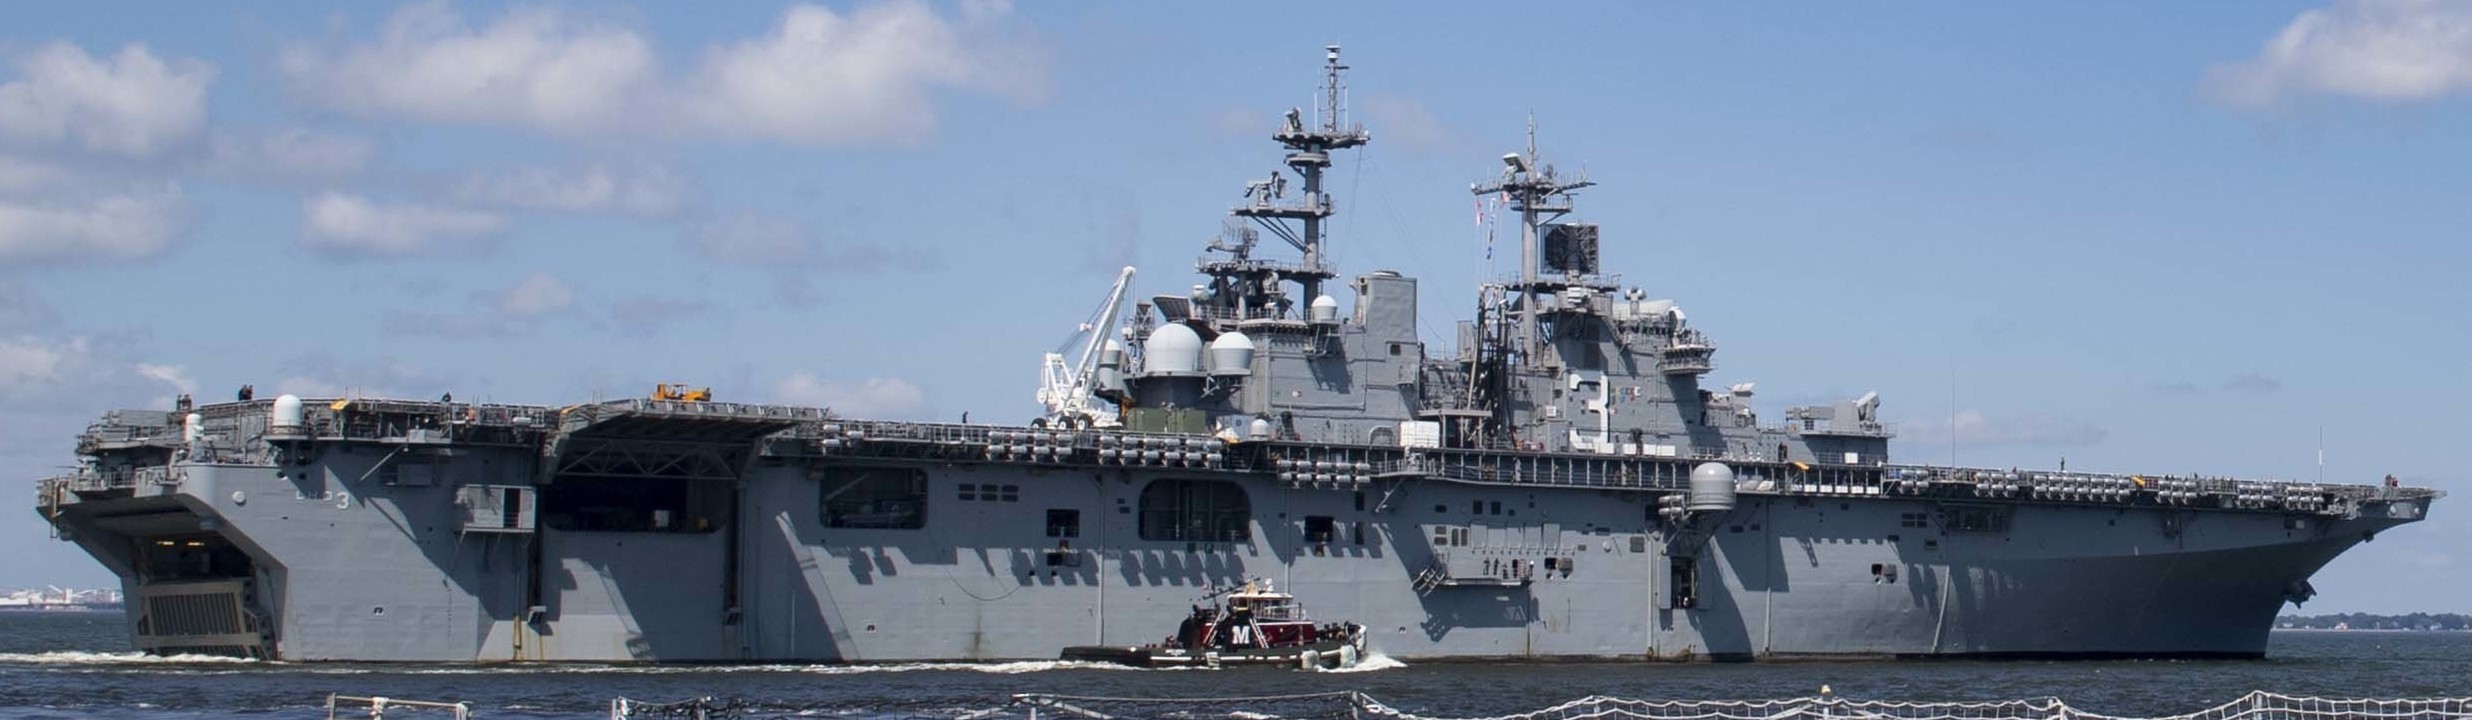 lhd-3 uss kearsarge wasp class amphibious assault ship landing dock us navy marines departing norfolk 186